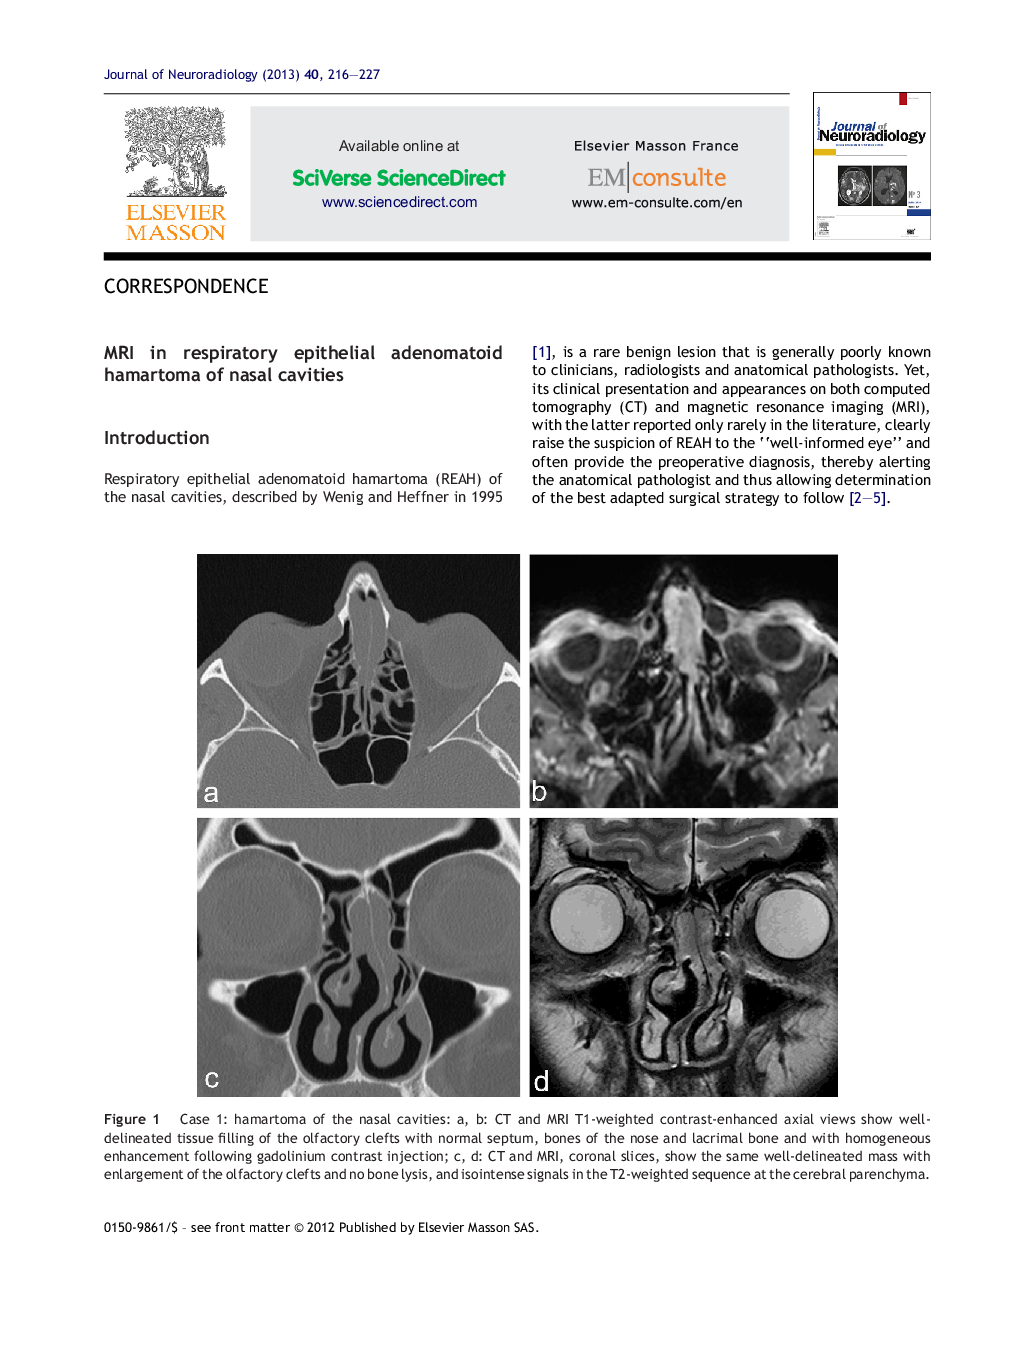 MRI in respiratory epithelial adenomatoid hamartoma of nasal cavities